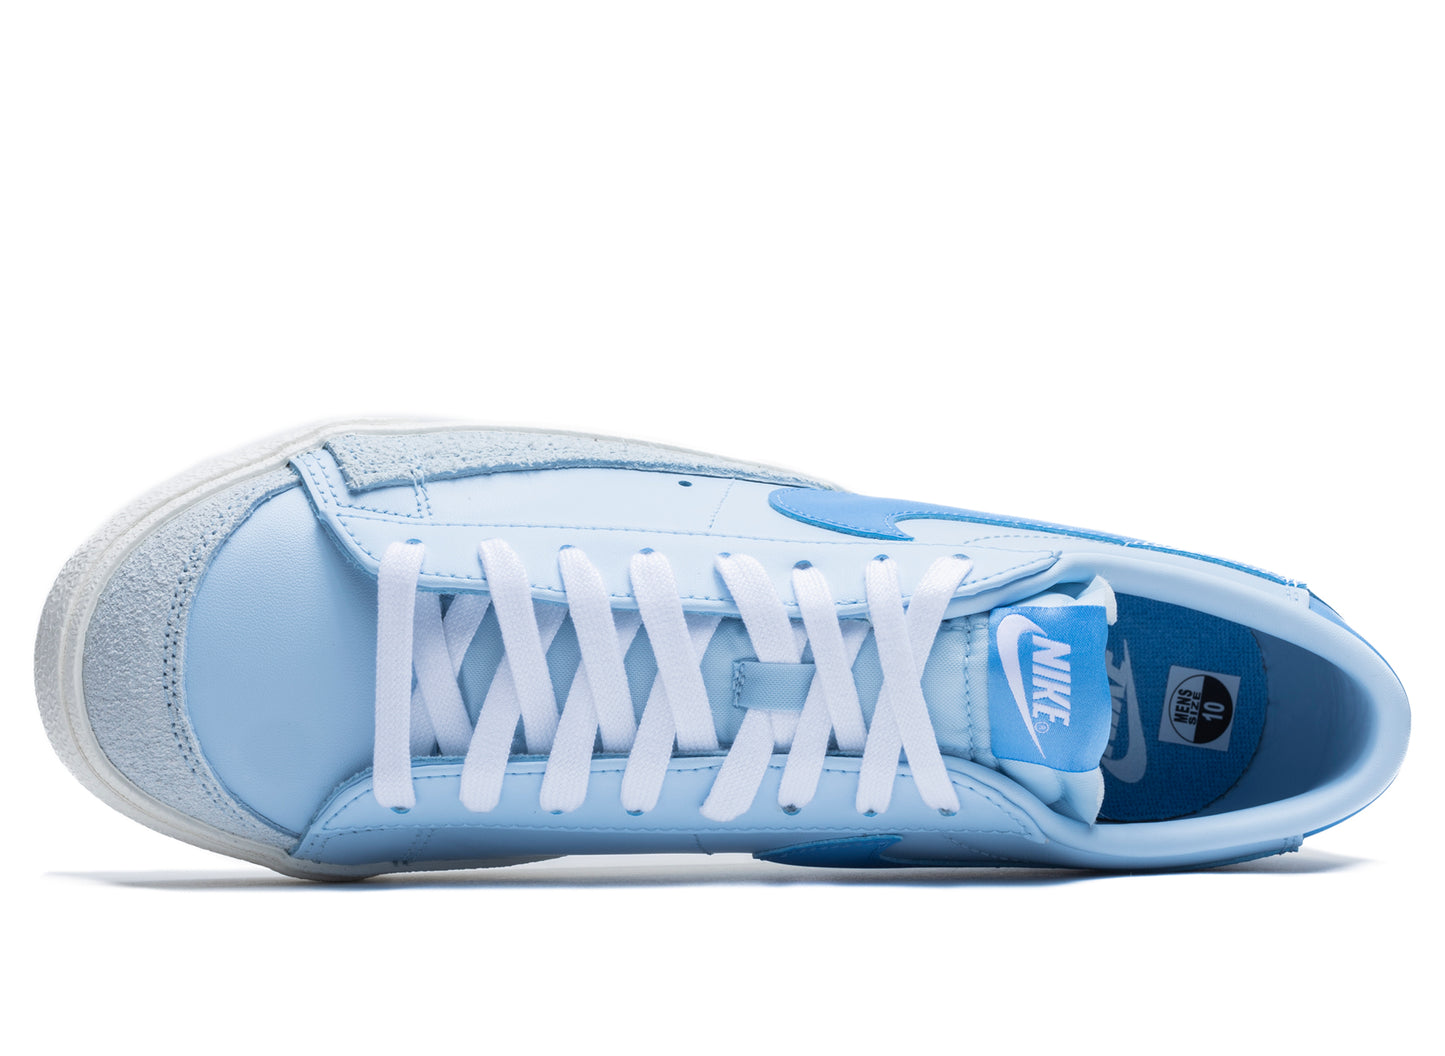 Nike Blazer Low '77 Vintage in Celestine Blue